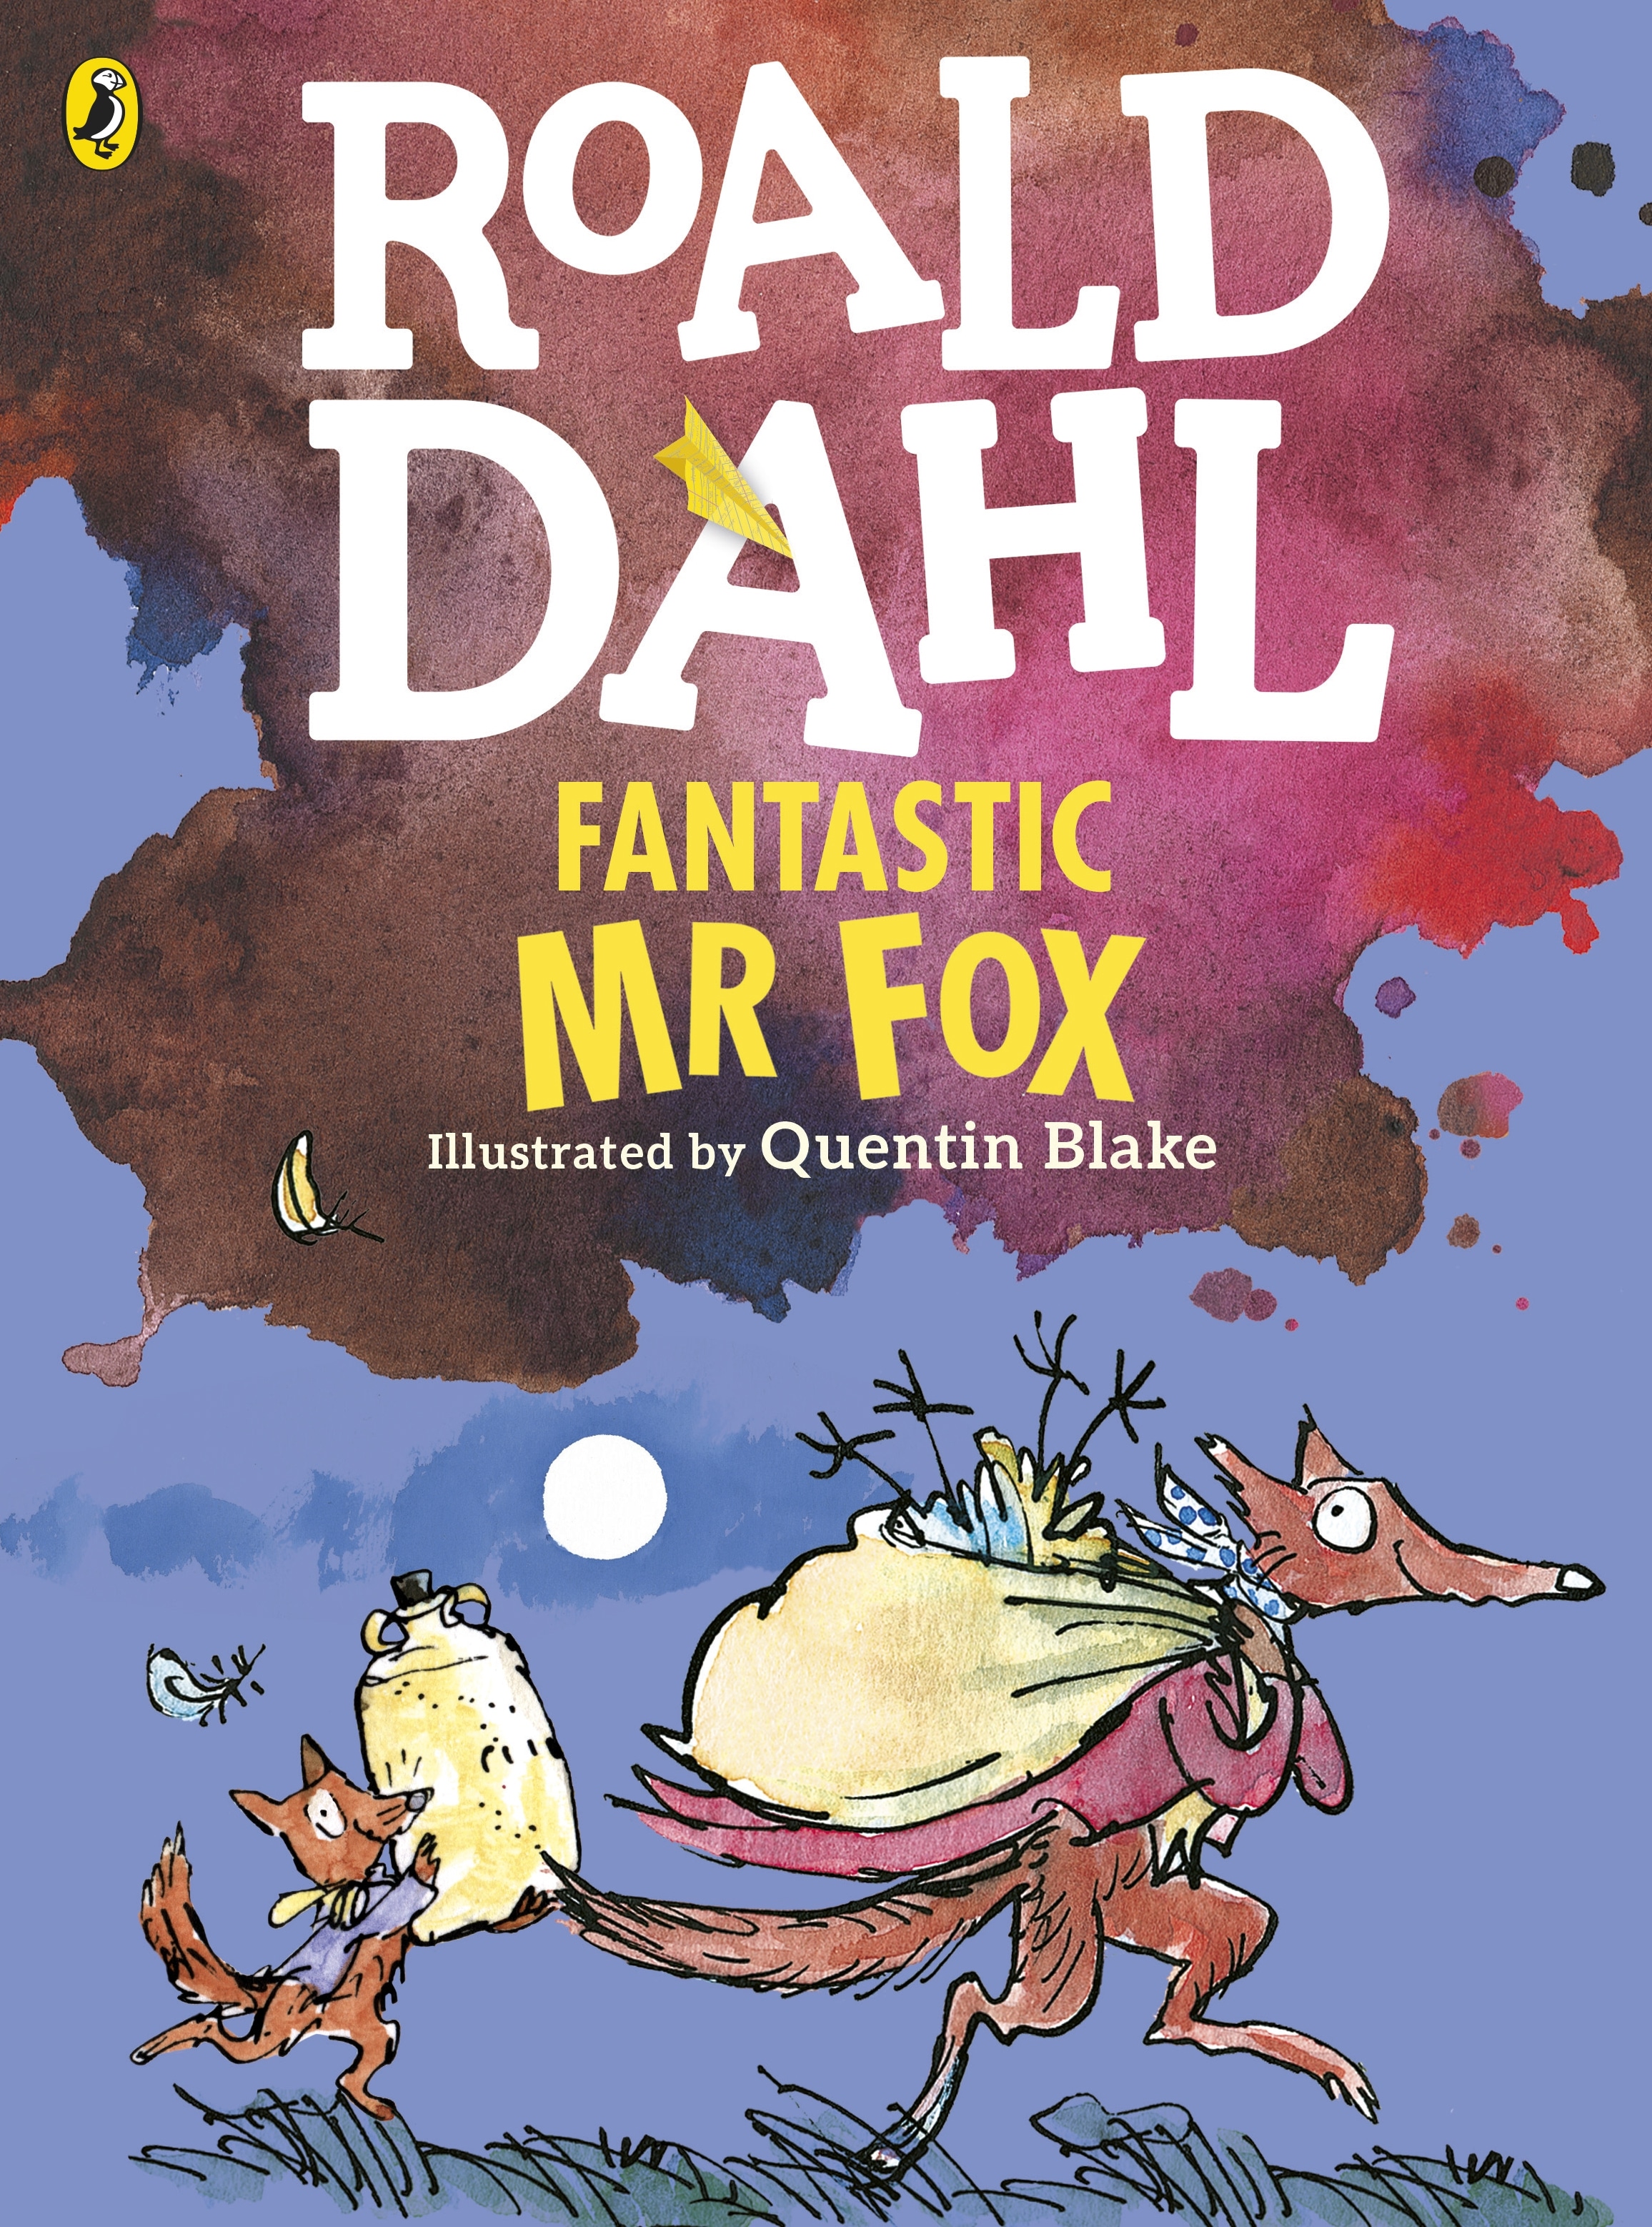 Book “Fantastic Mr Fox (Colour Edn)” by Roald Dahl — June 2, 2016